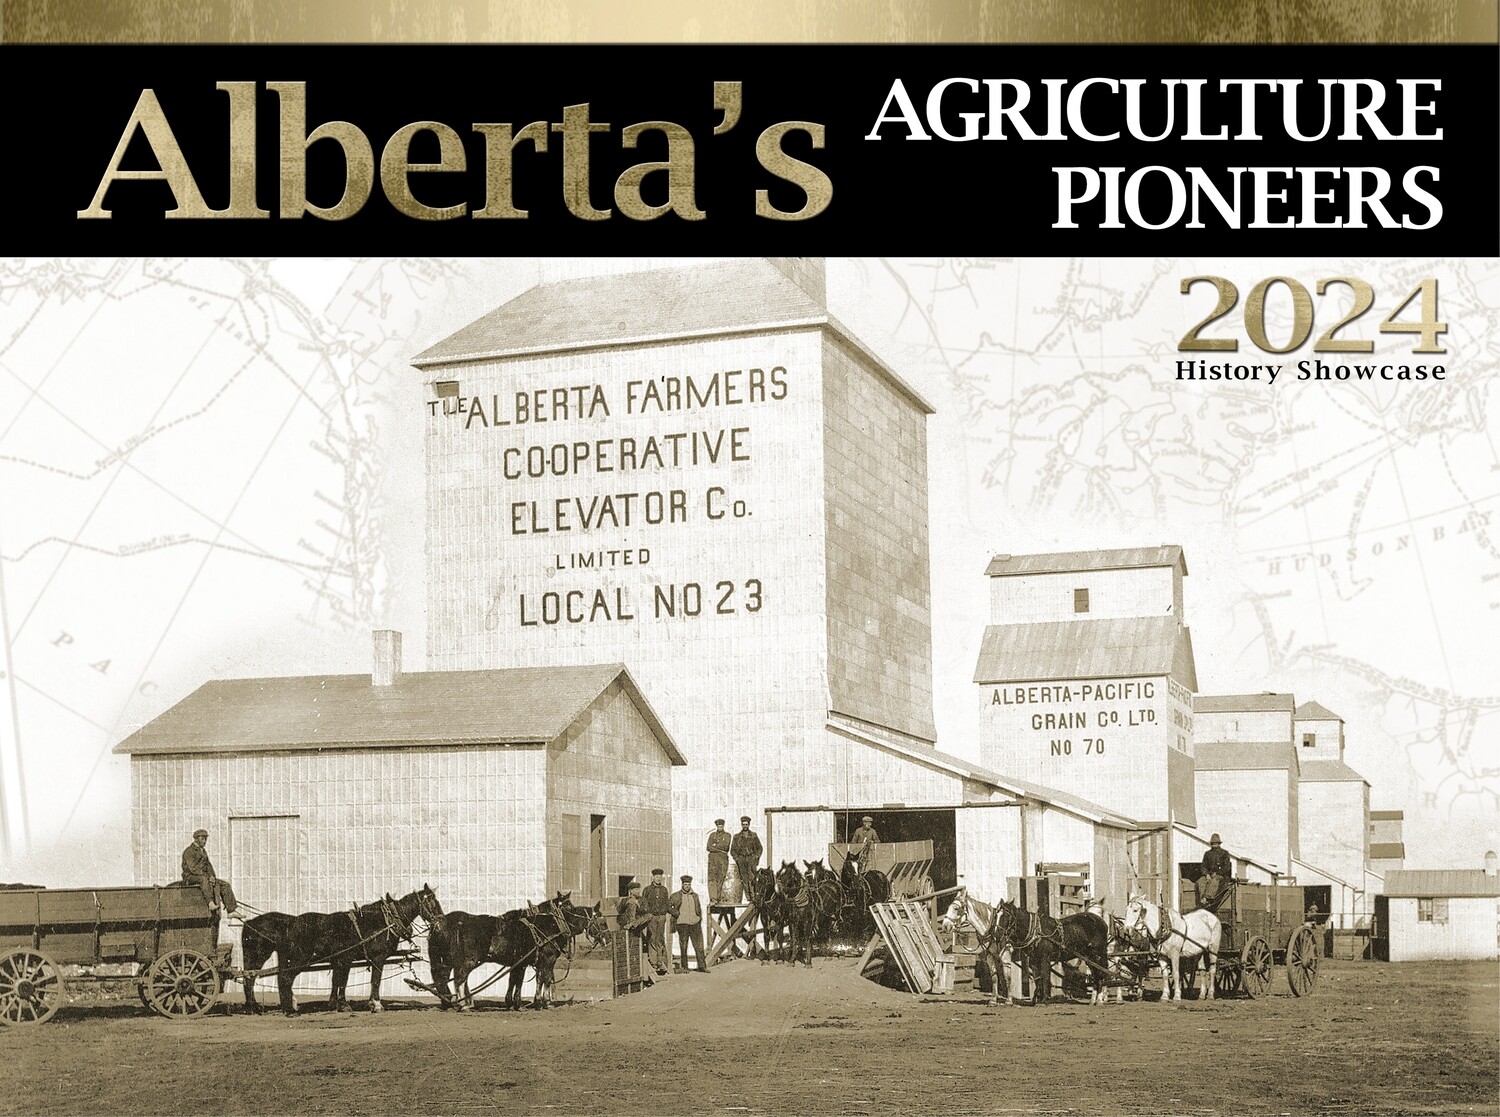 Alberta's Agriculture Pioneers 2024